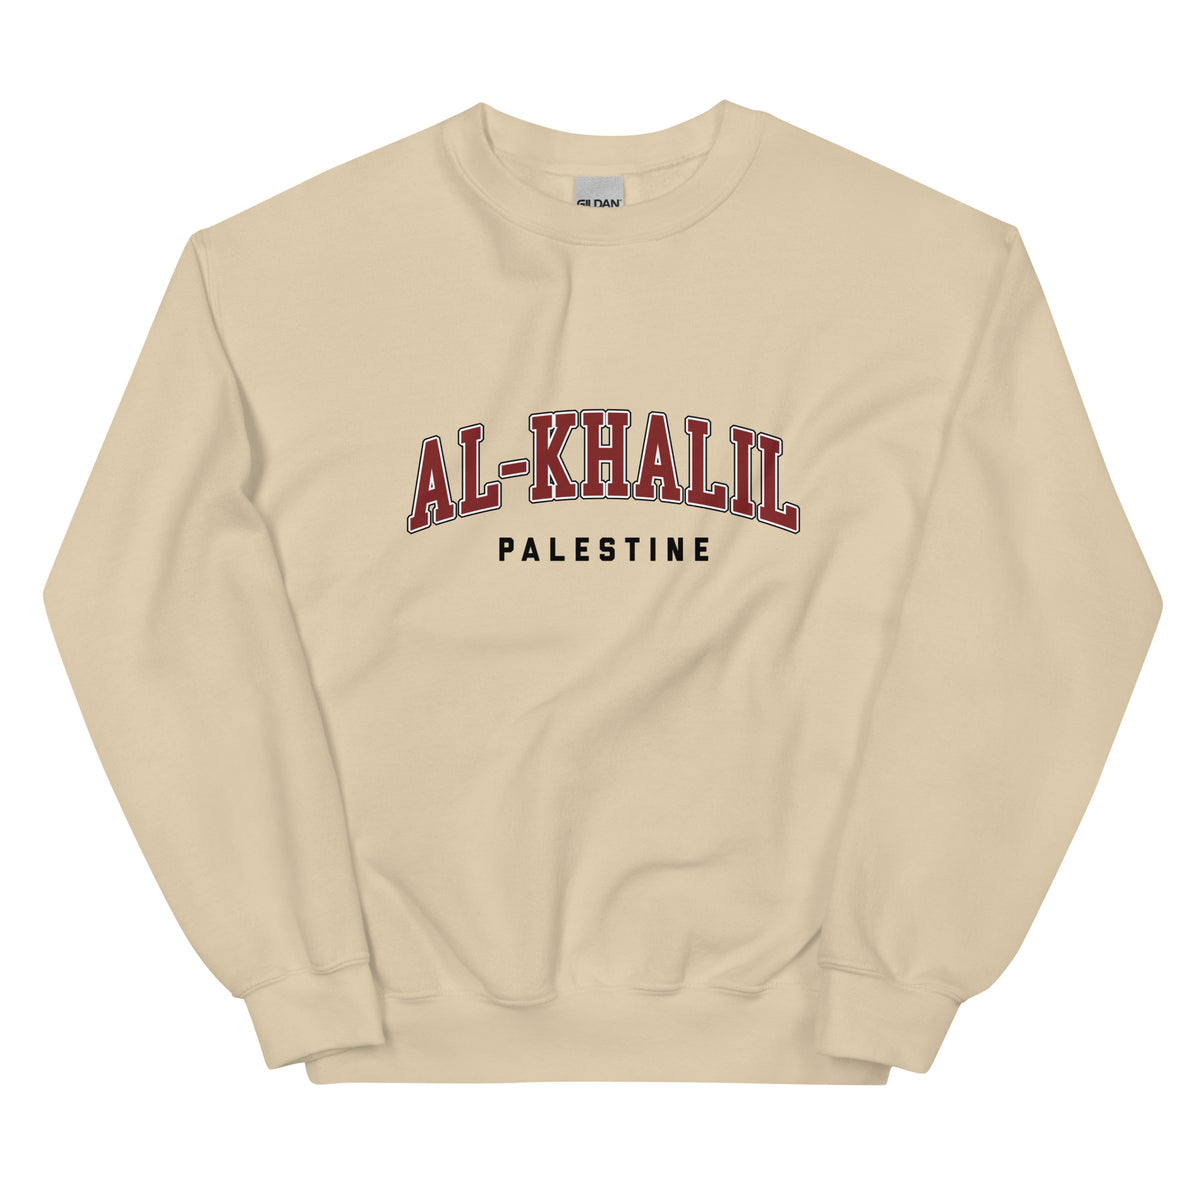 Al-Khalil, Palestine - Sweatshirt